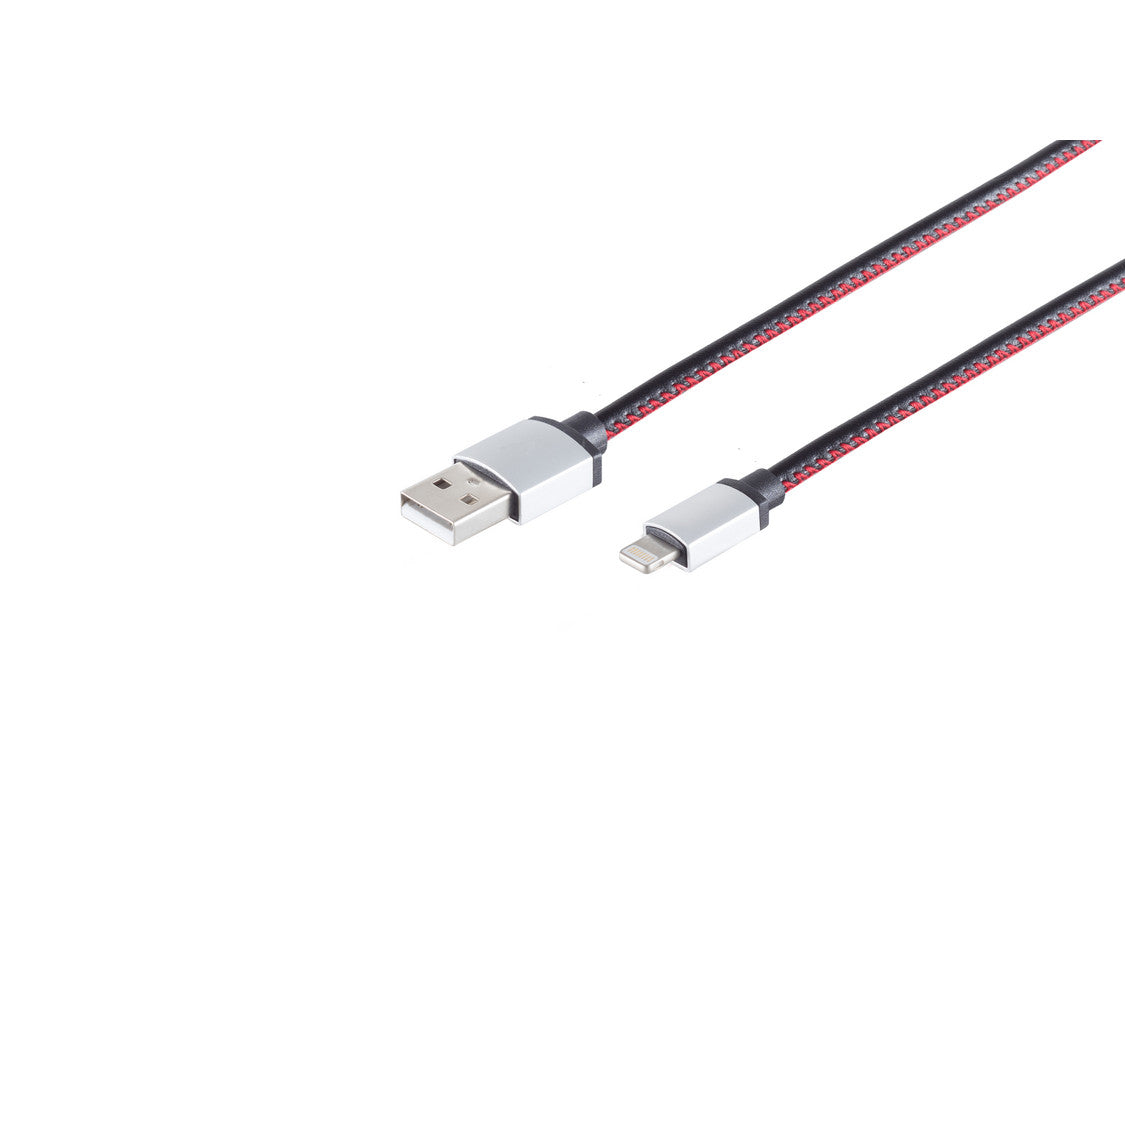 8-Pin Ladekabel, USB-A-Stecker auf 8-pin Stecker, Leder